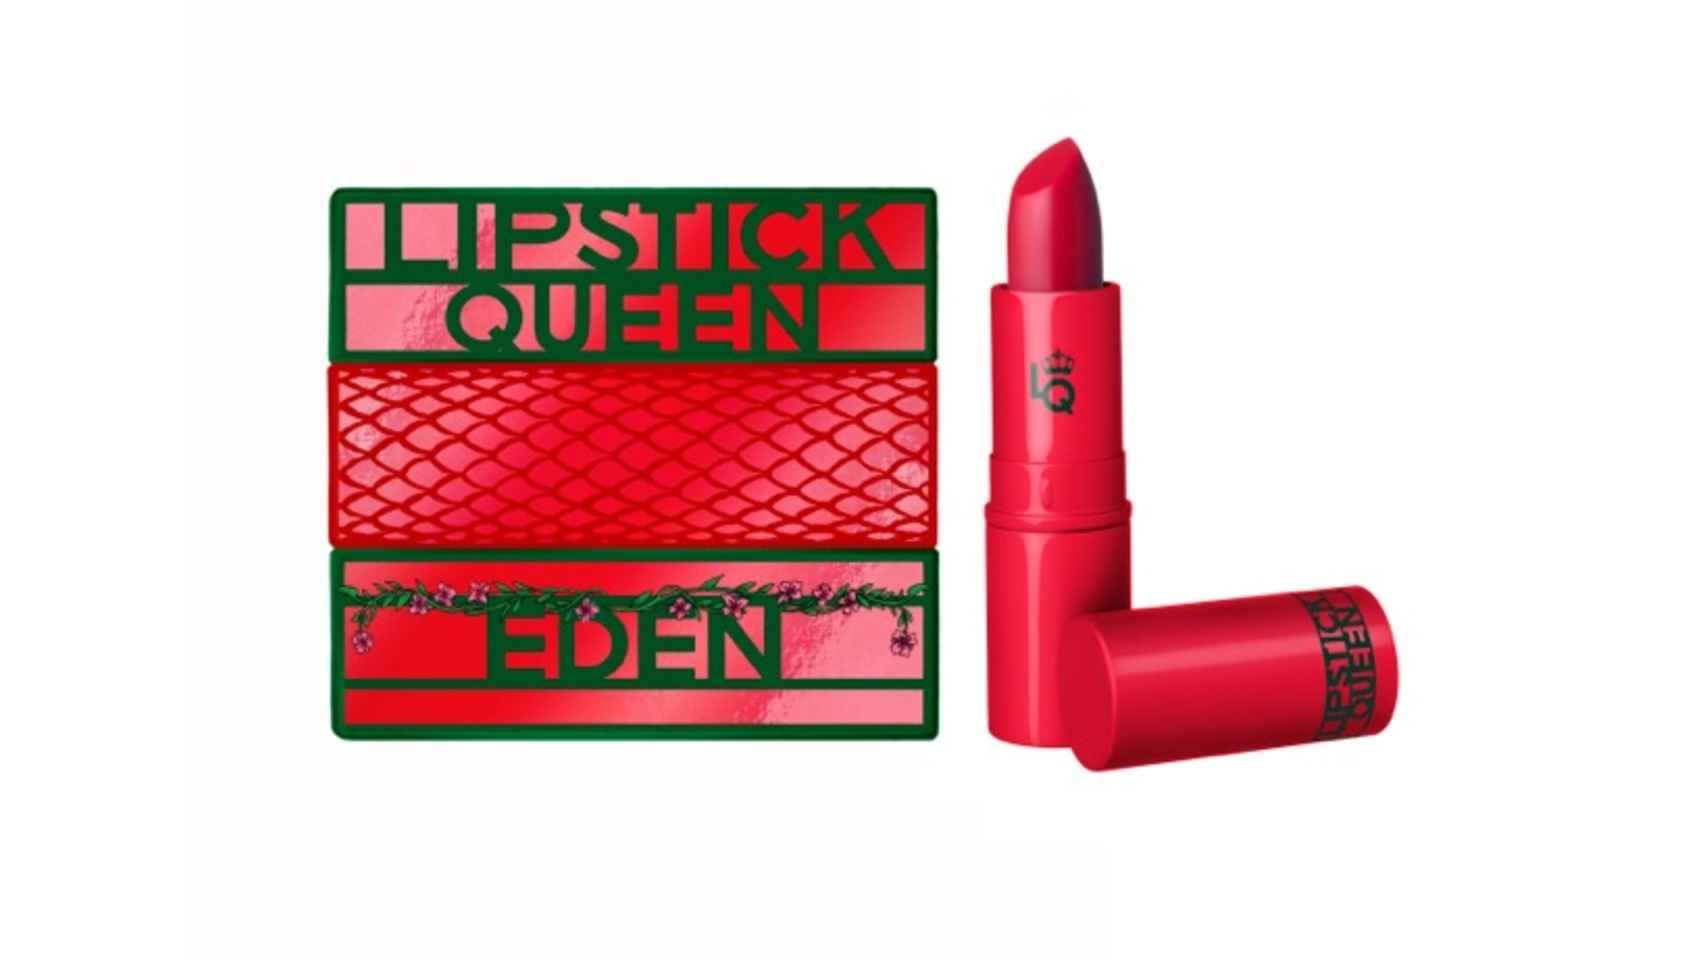 Lipstick Queen.